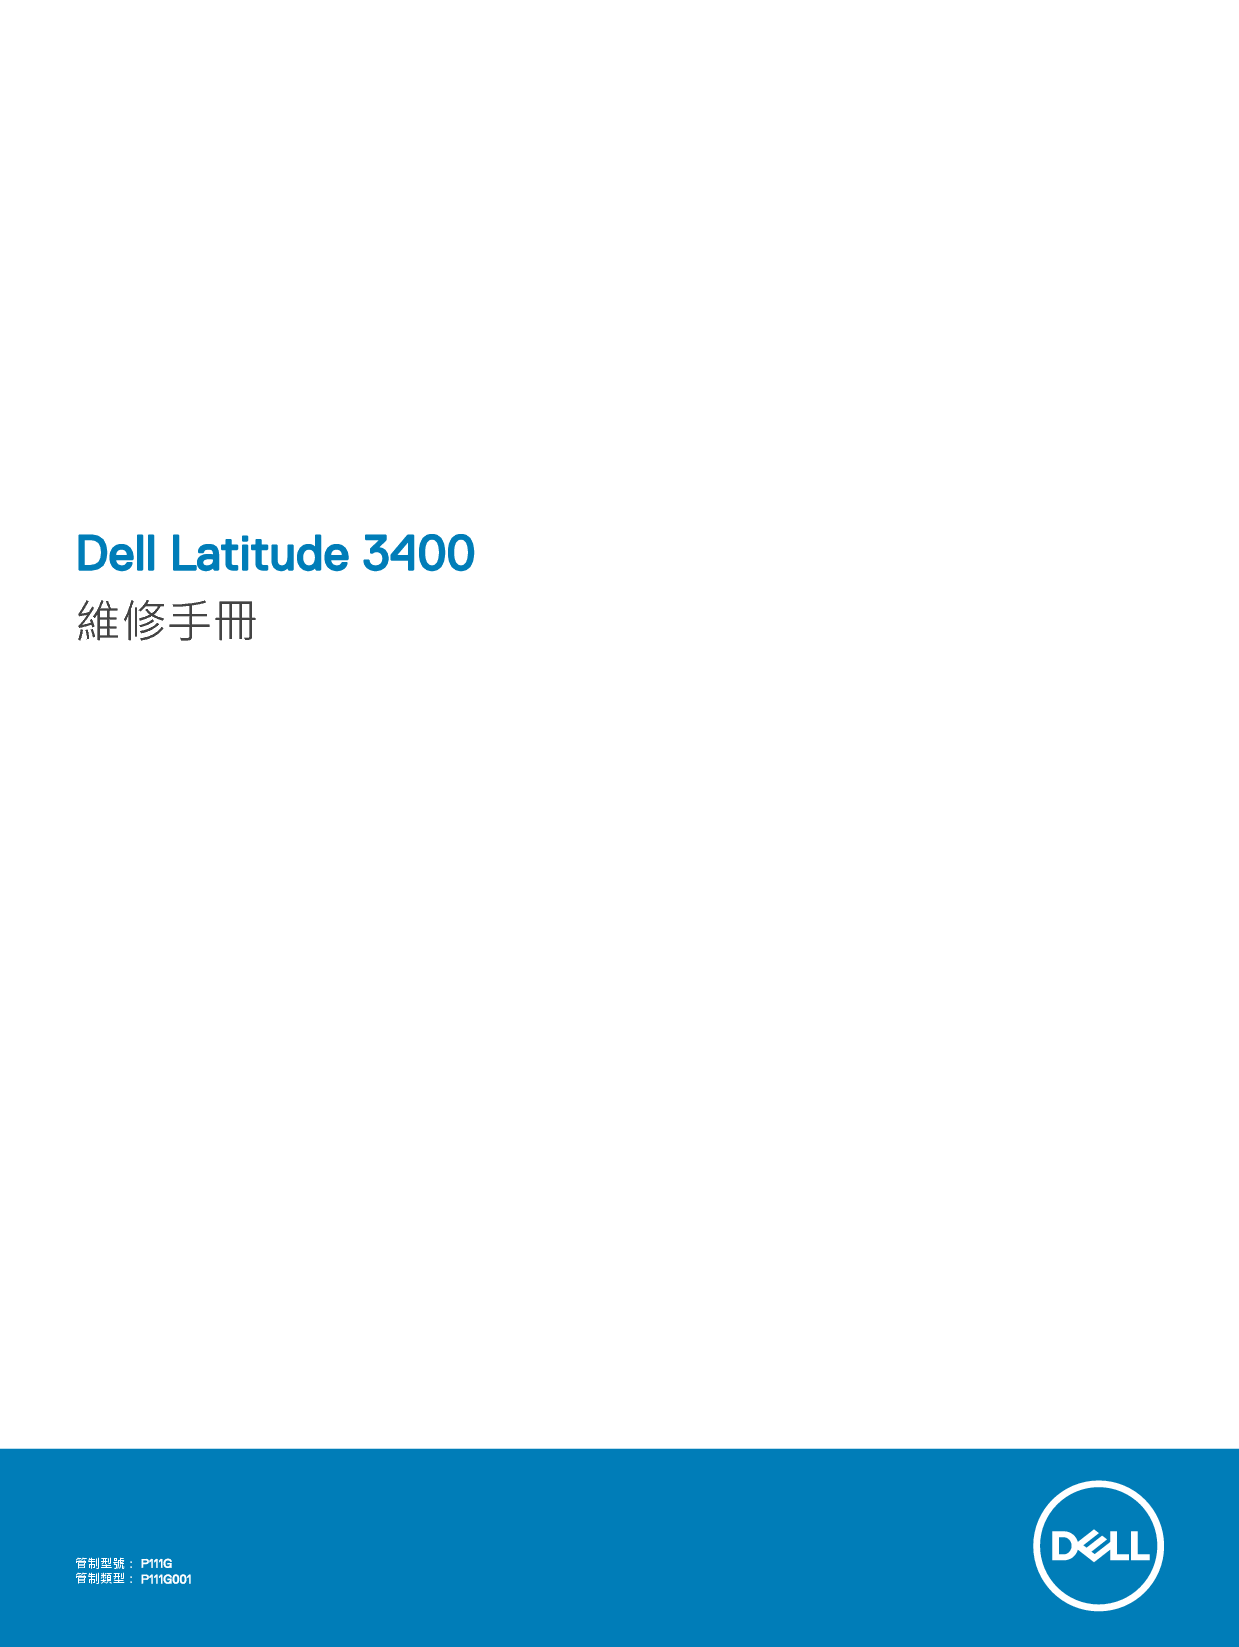 戴尔 Dell Latitude 3400 繁体 用户手册 封面